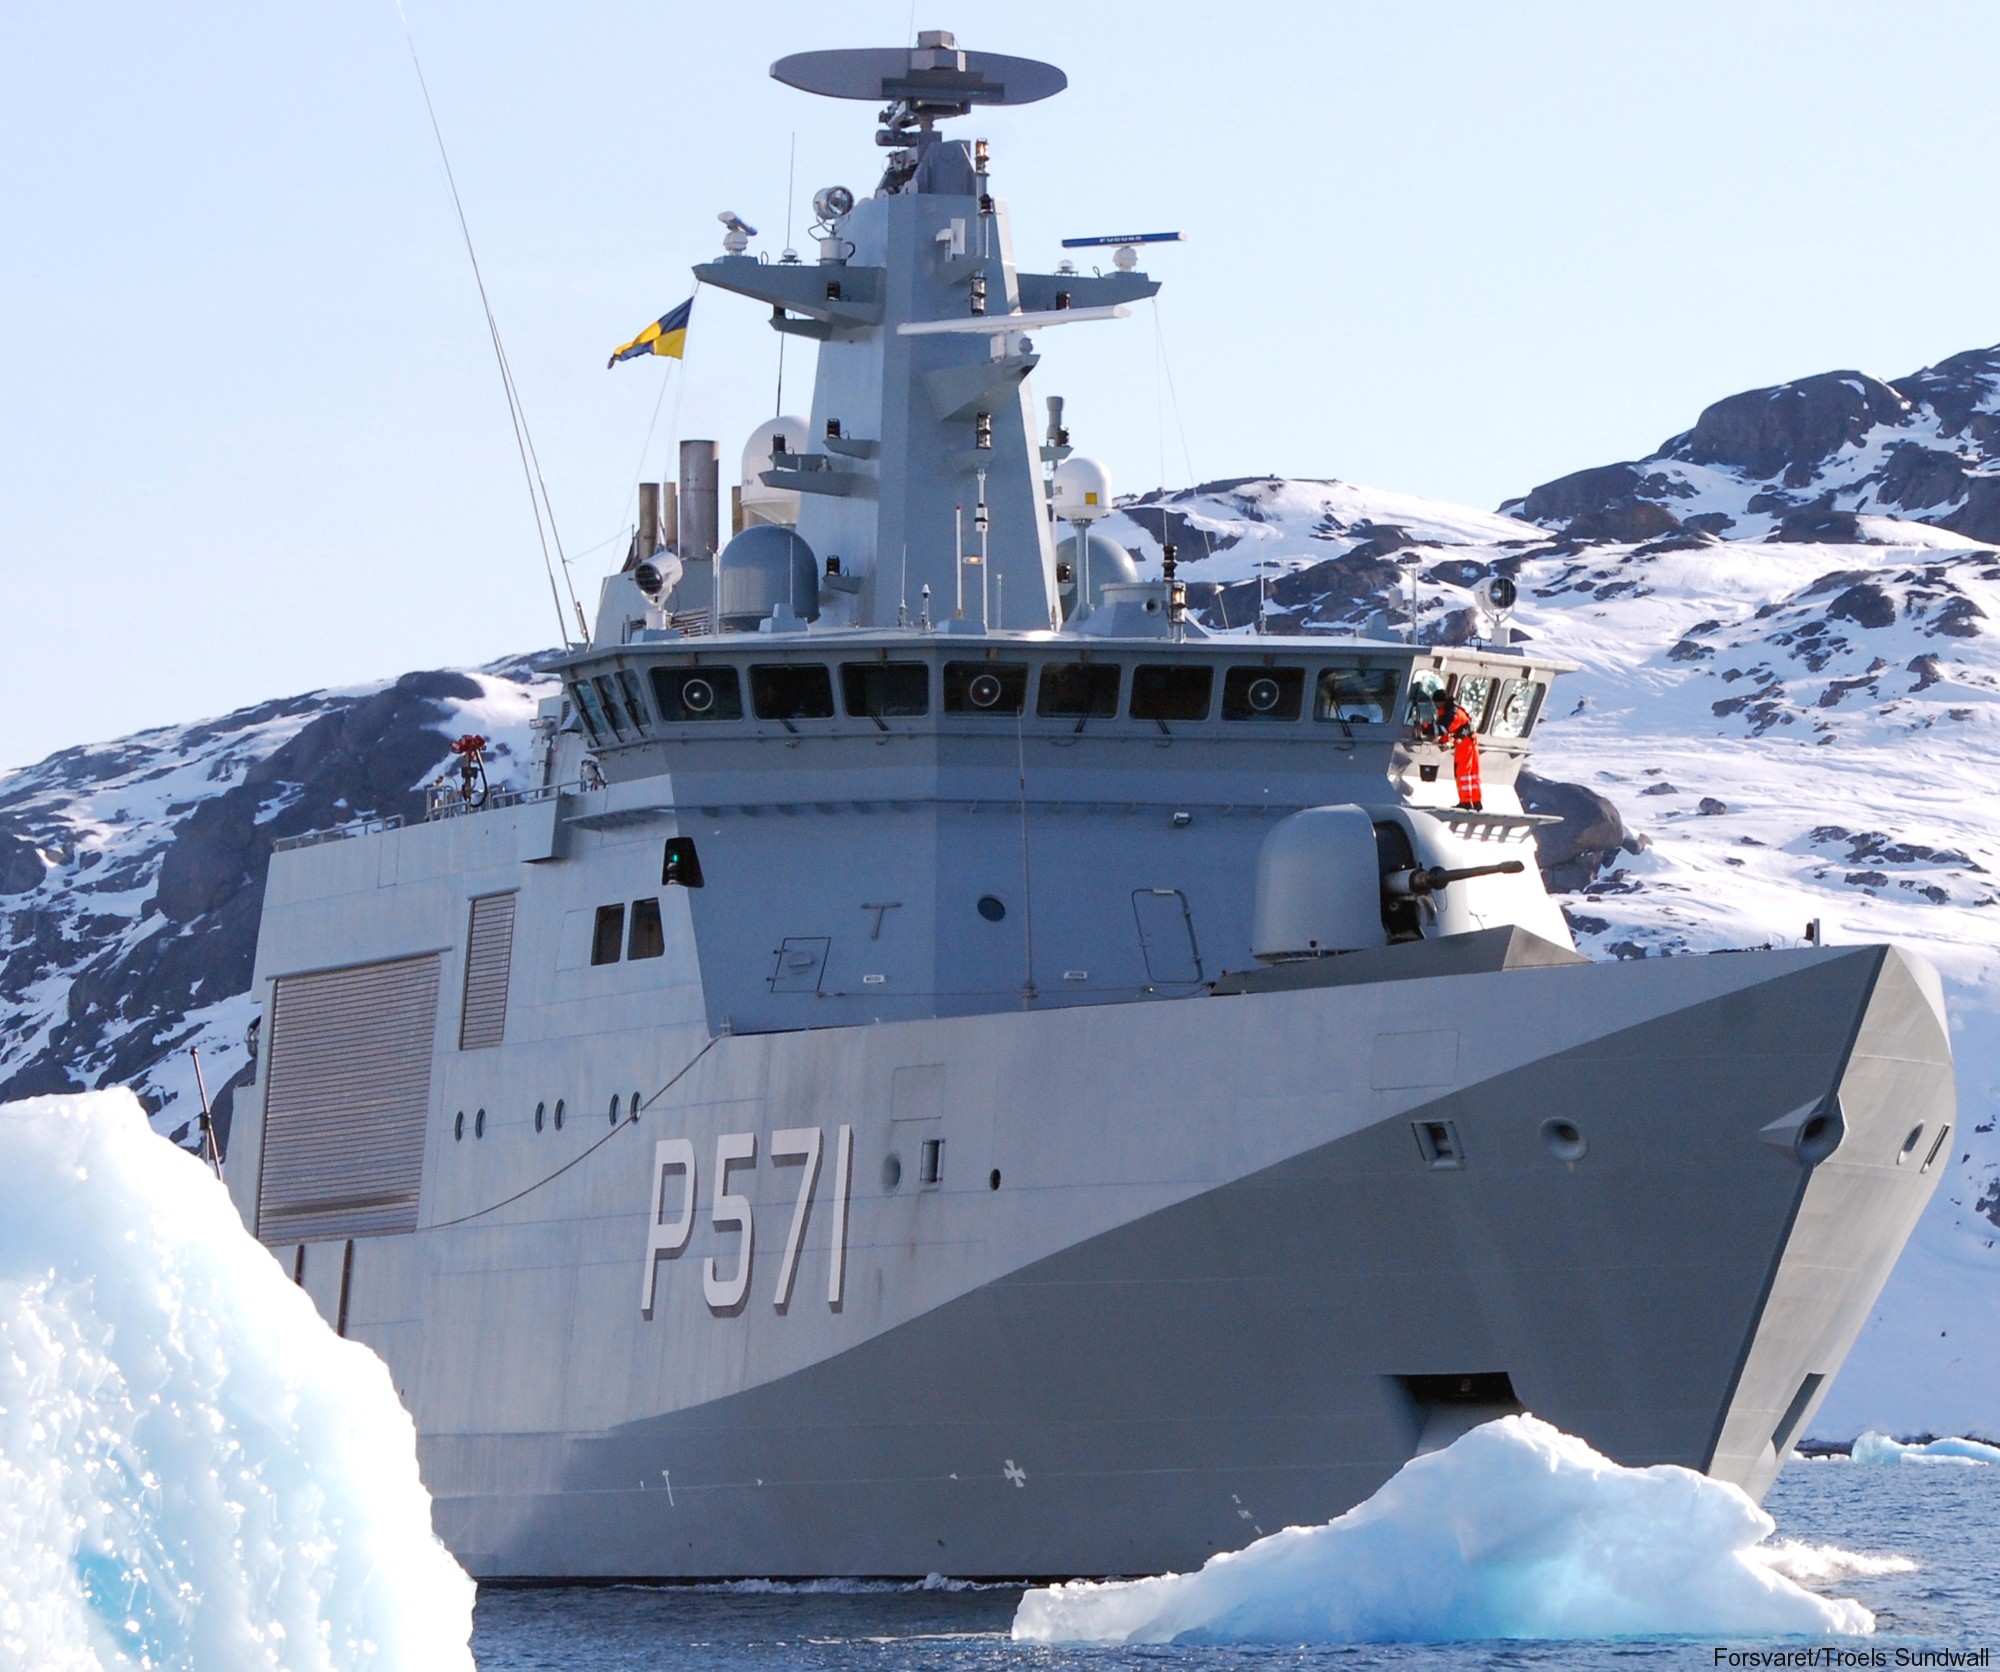 p-571 hdms ejnar mikkelsen knud rasmussen class offshore patrol vessel opv royal danish navy inspektionsfartøj 17